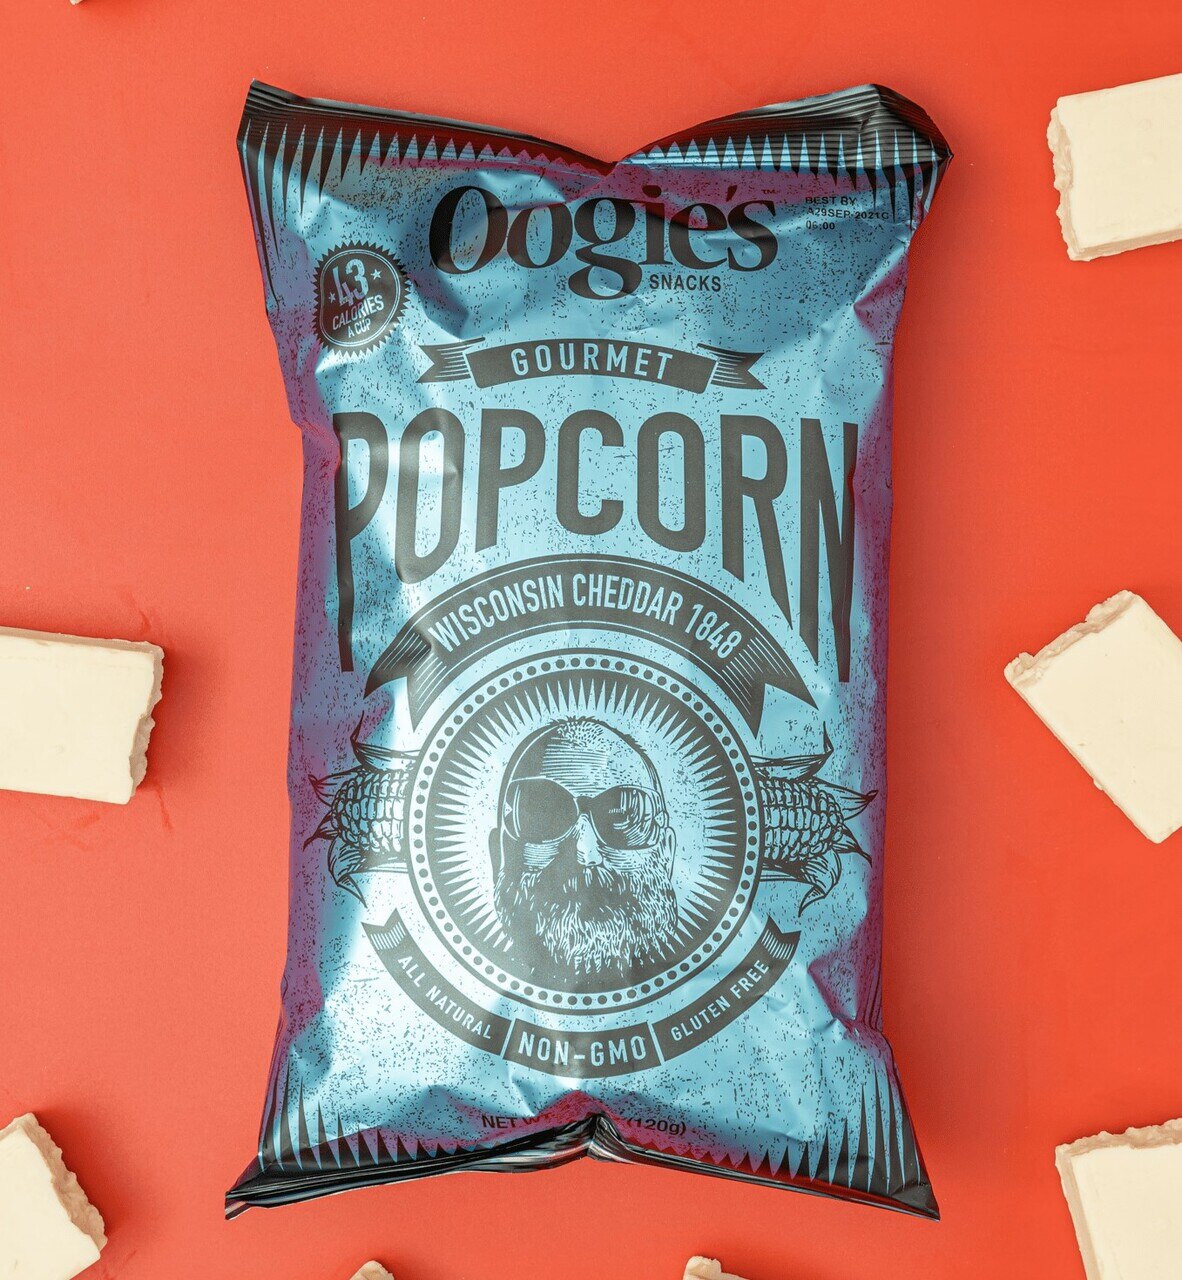 Wisconsin cheddar gourmet popcorn bag